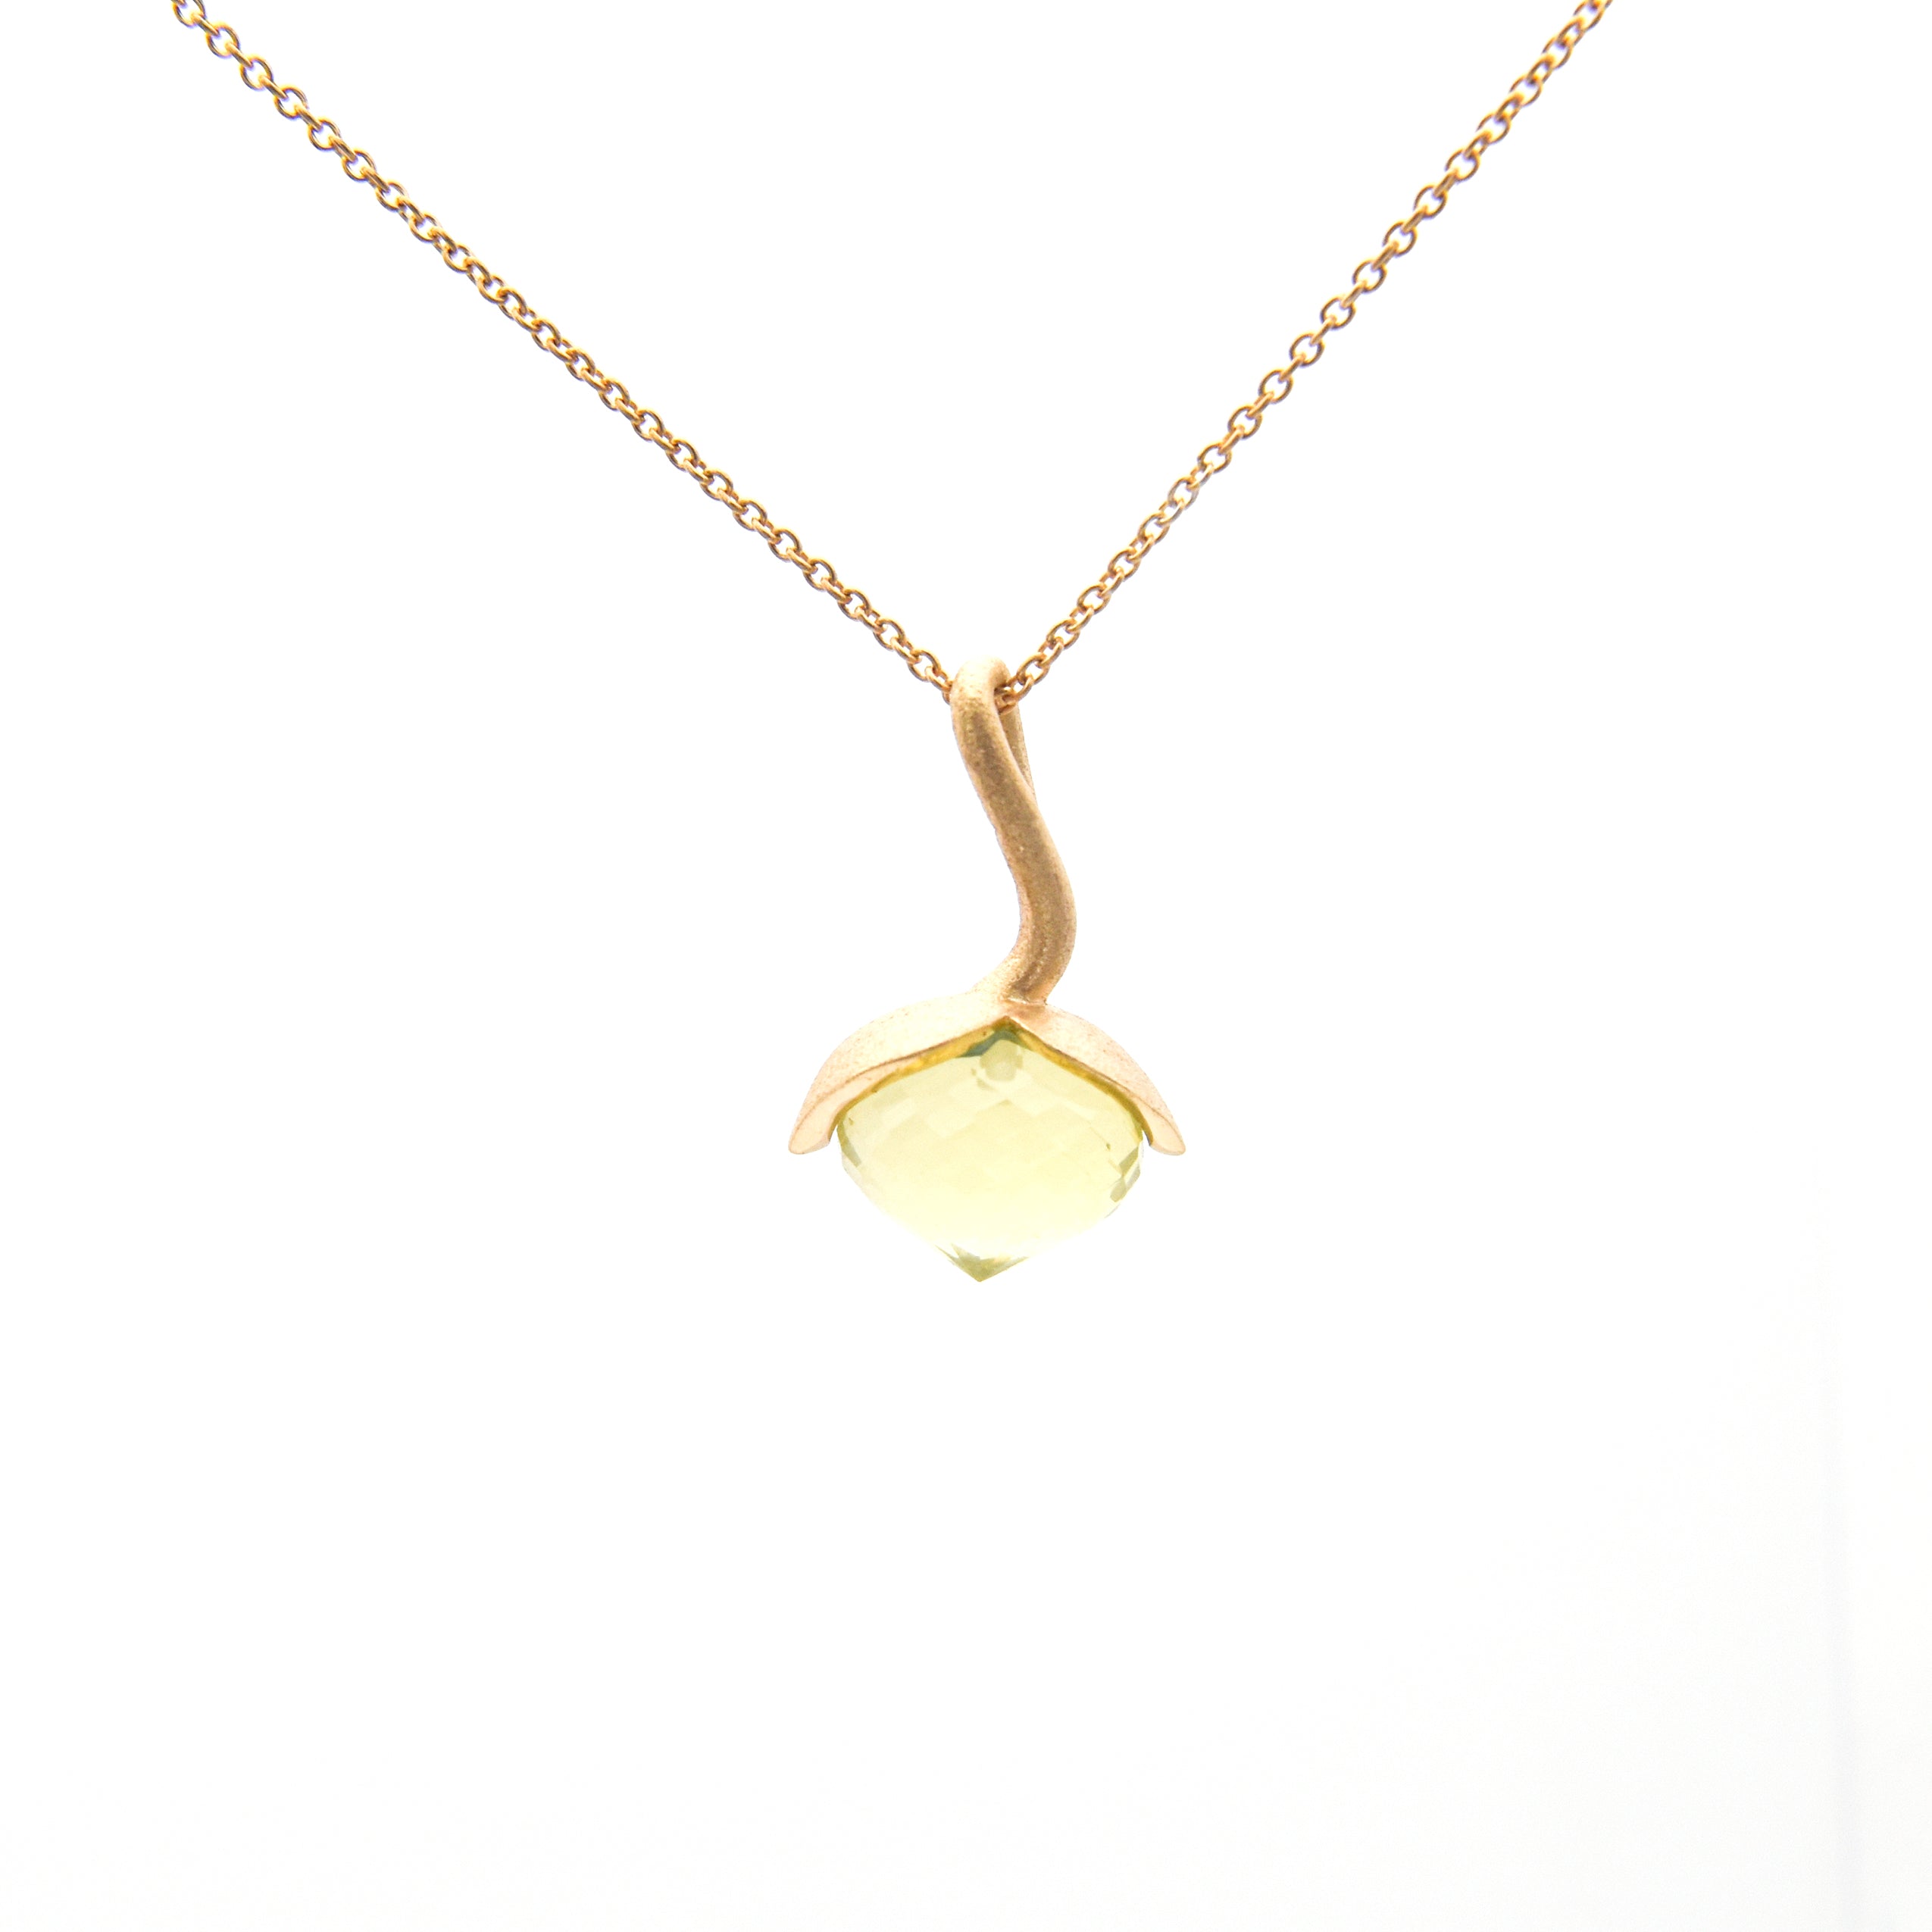 Dolce pendant "medium" with lemon quartz 925/-